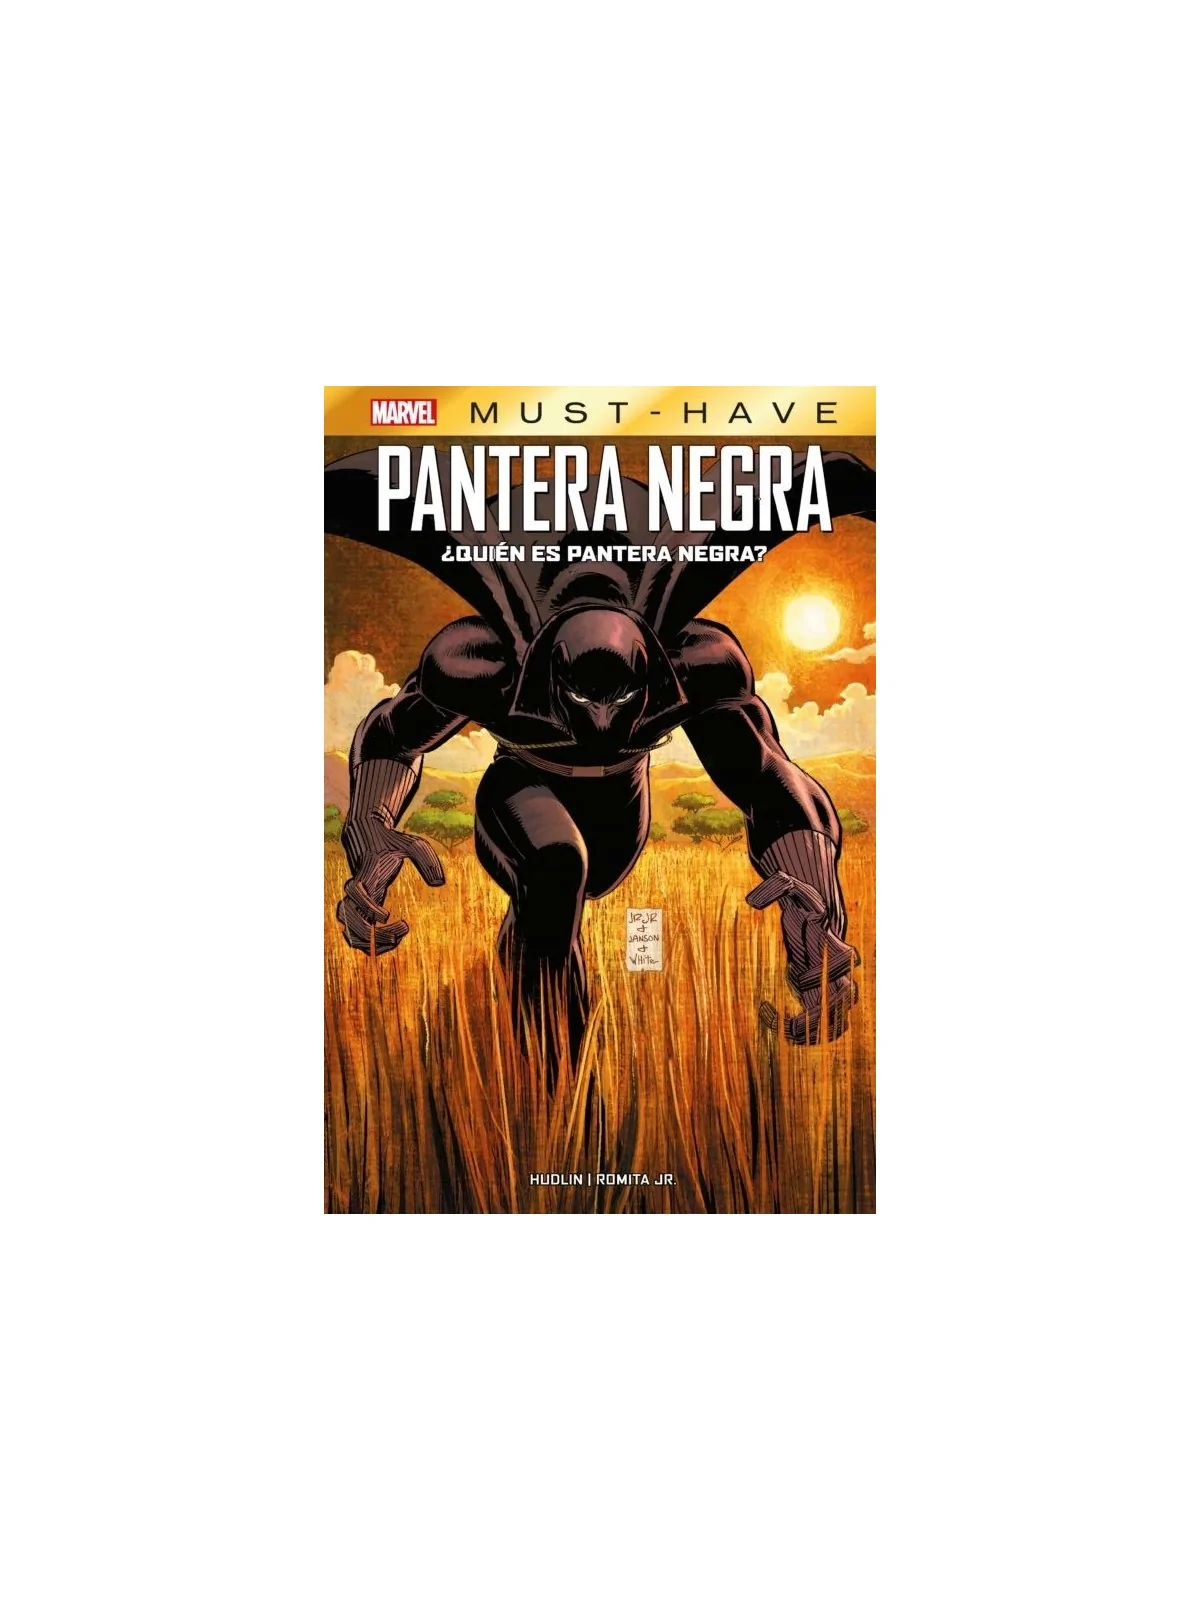 Comprar Marvel Must-Have: Pantera Negra - ¿Quién es Pantera Negra? bar